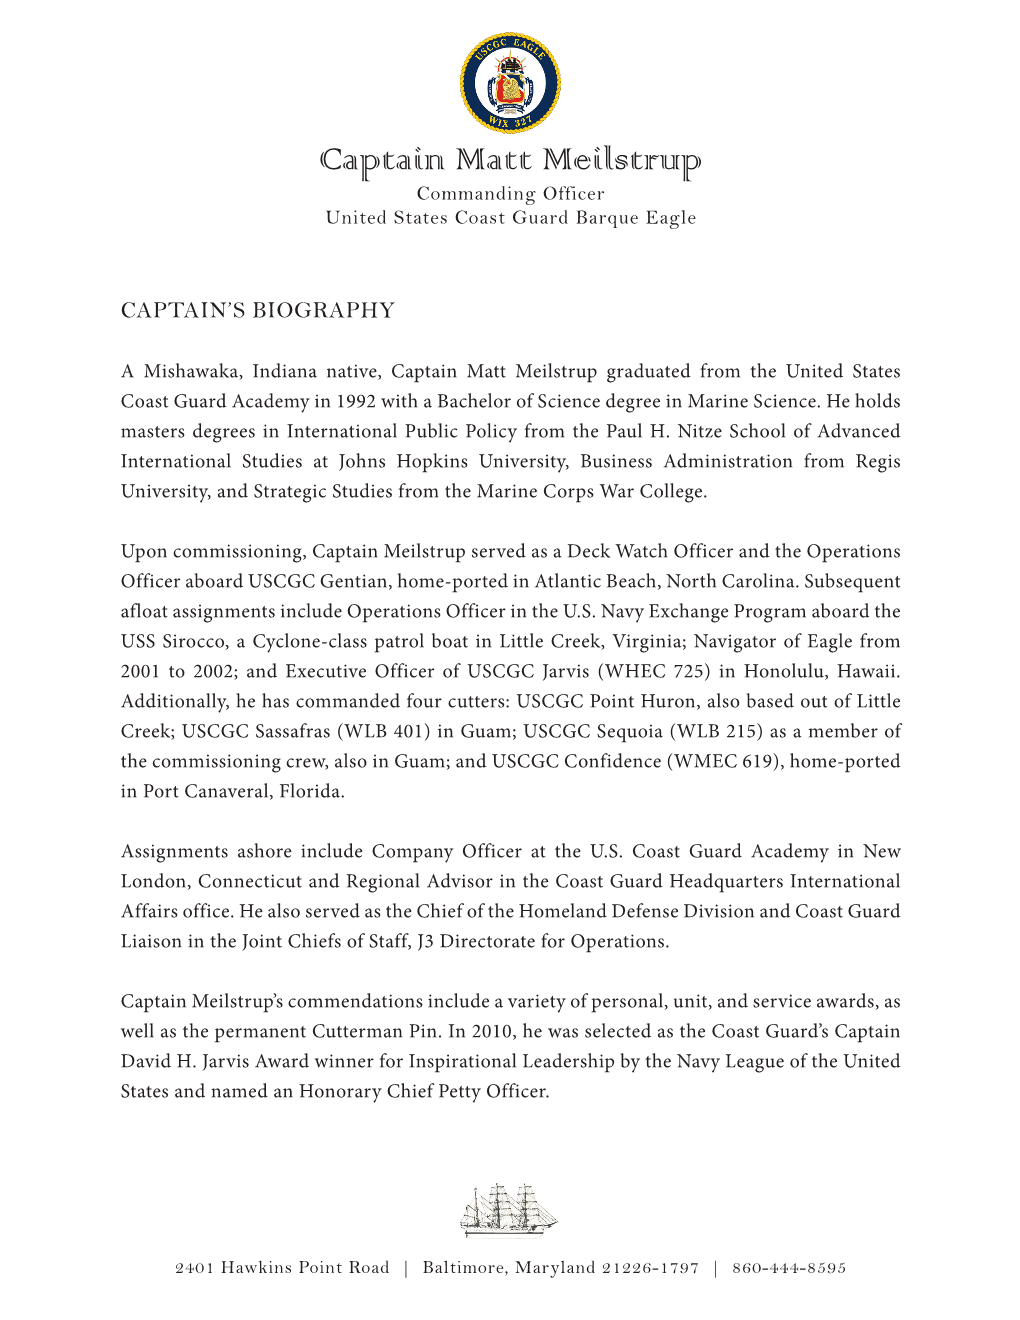 Captain Matt Meilstrup Commanding Officer United States Coast Guard Barque Eagle